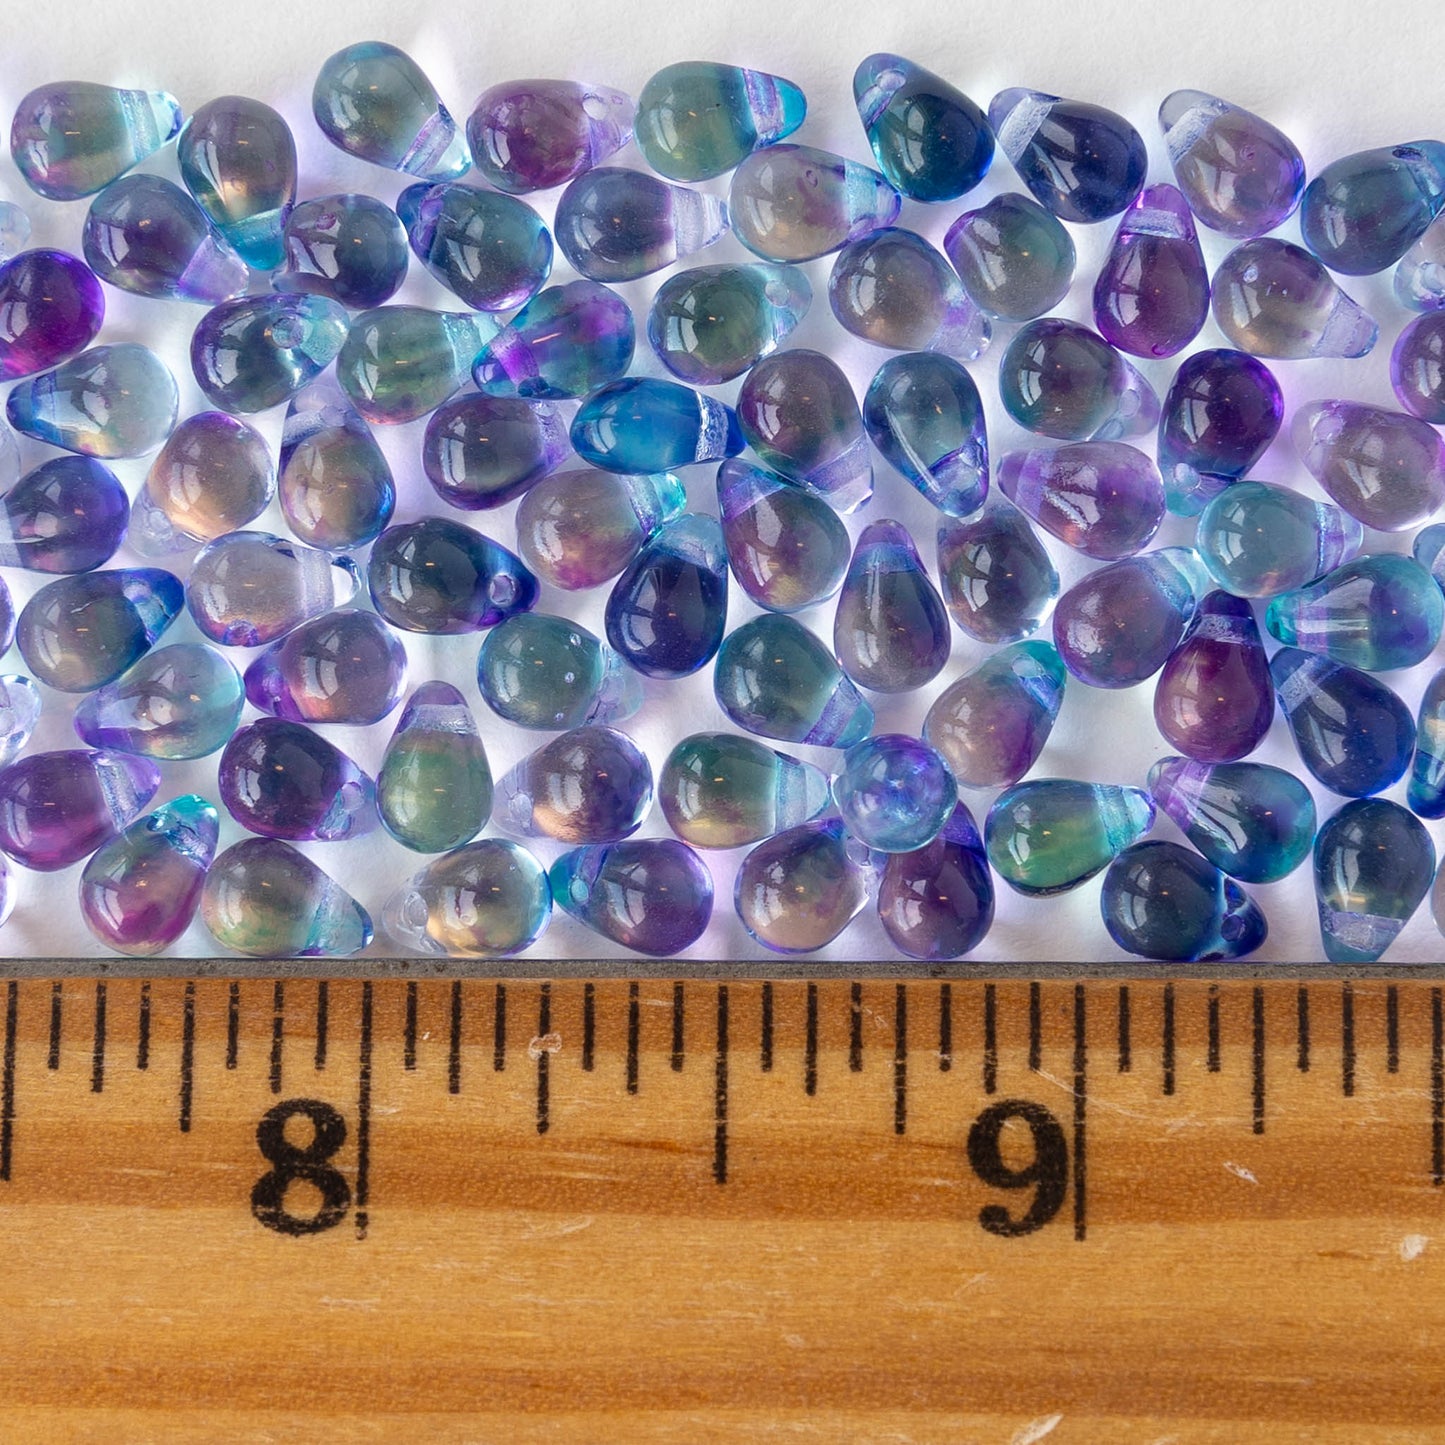 4x6mm Glass Teardrop Beads - Transparent Blue Lavender Mix - 100 Beads